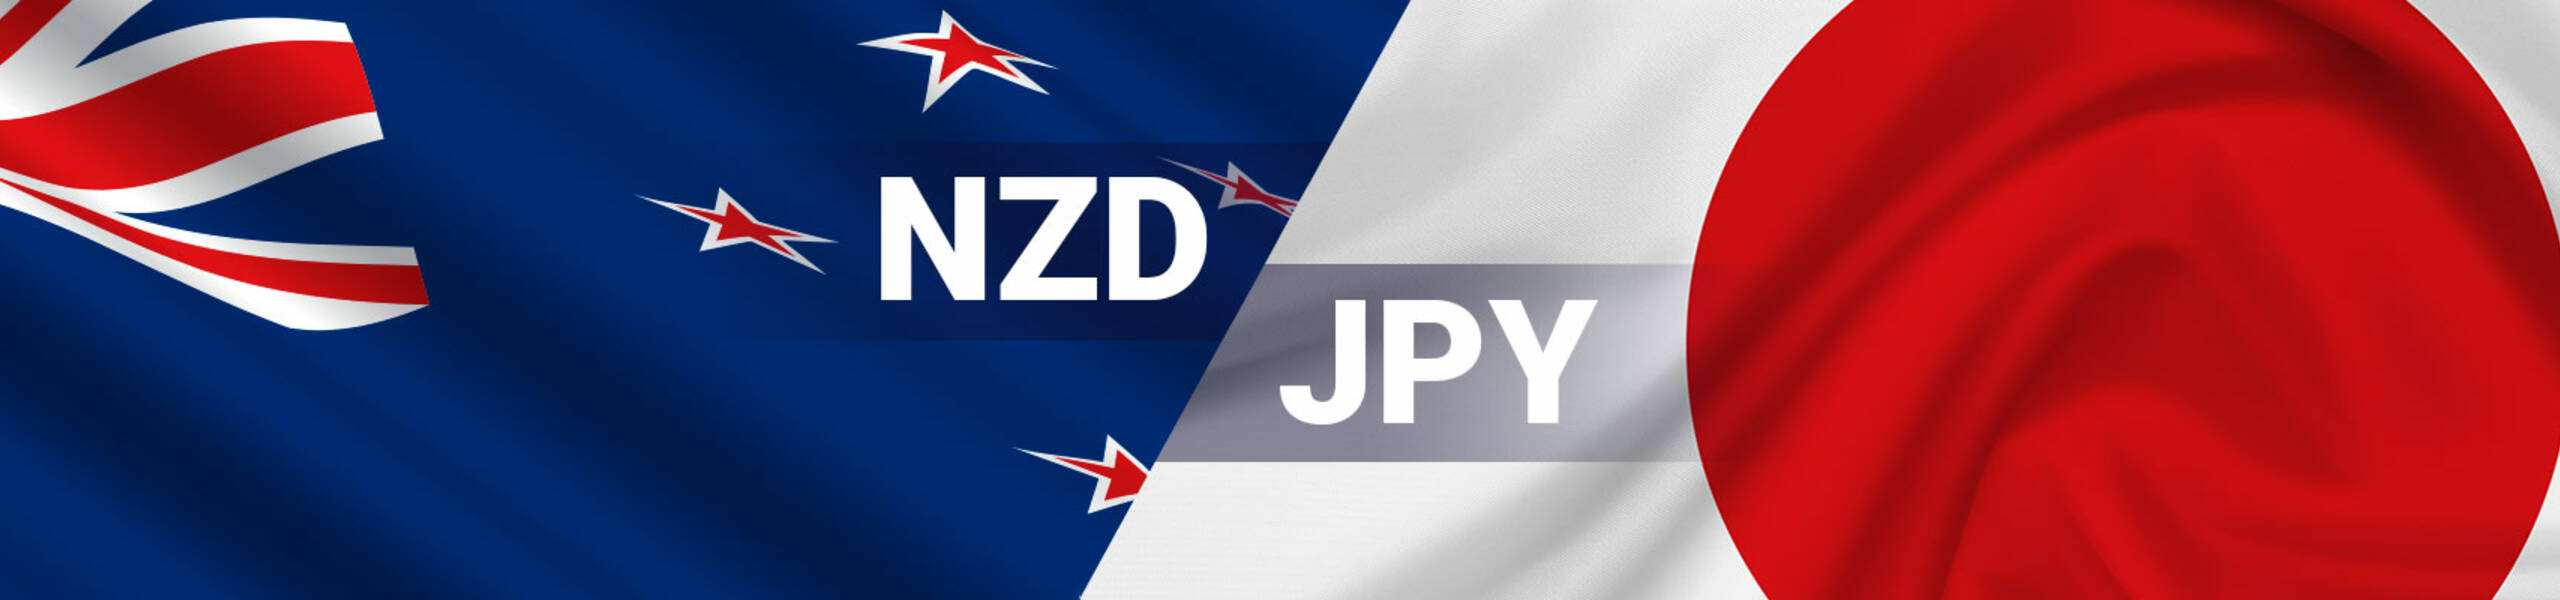 NZD/JPY Trade Signal 2017/12/19